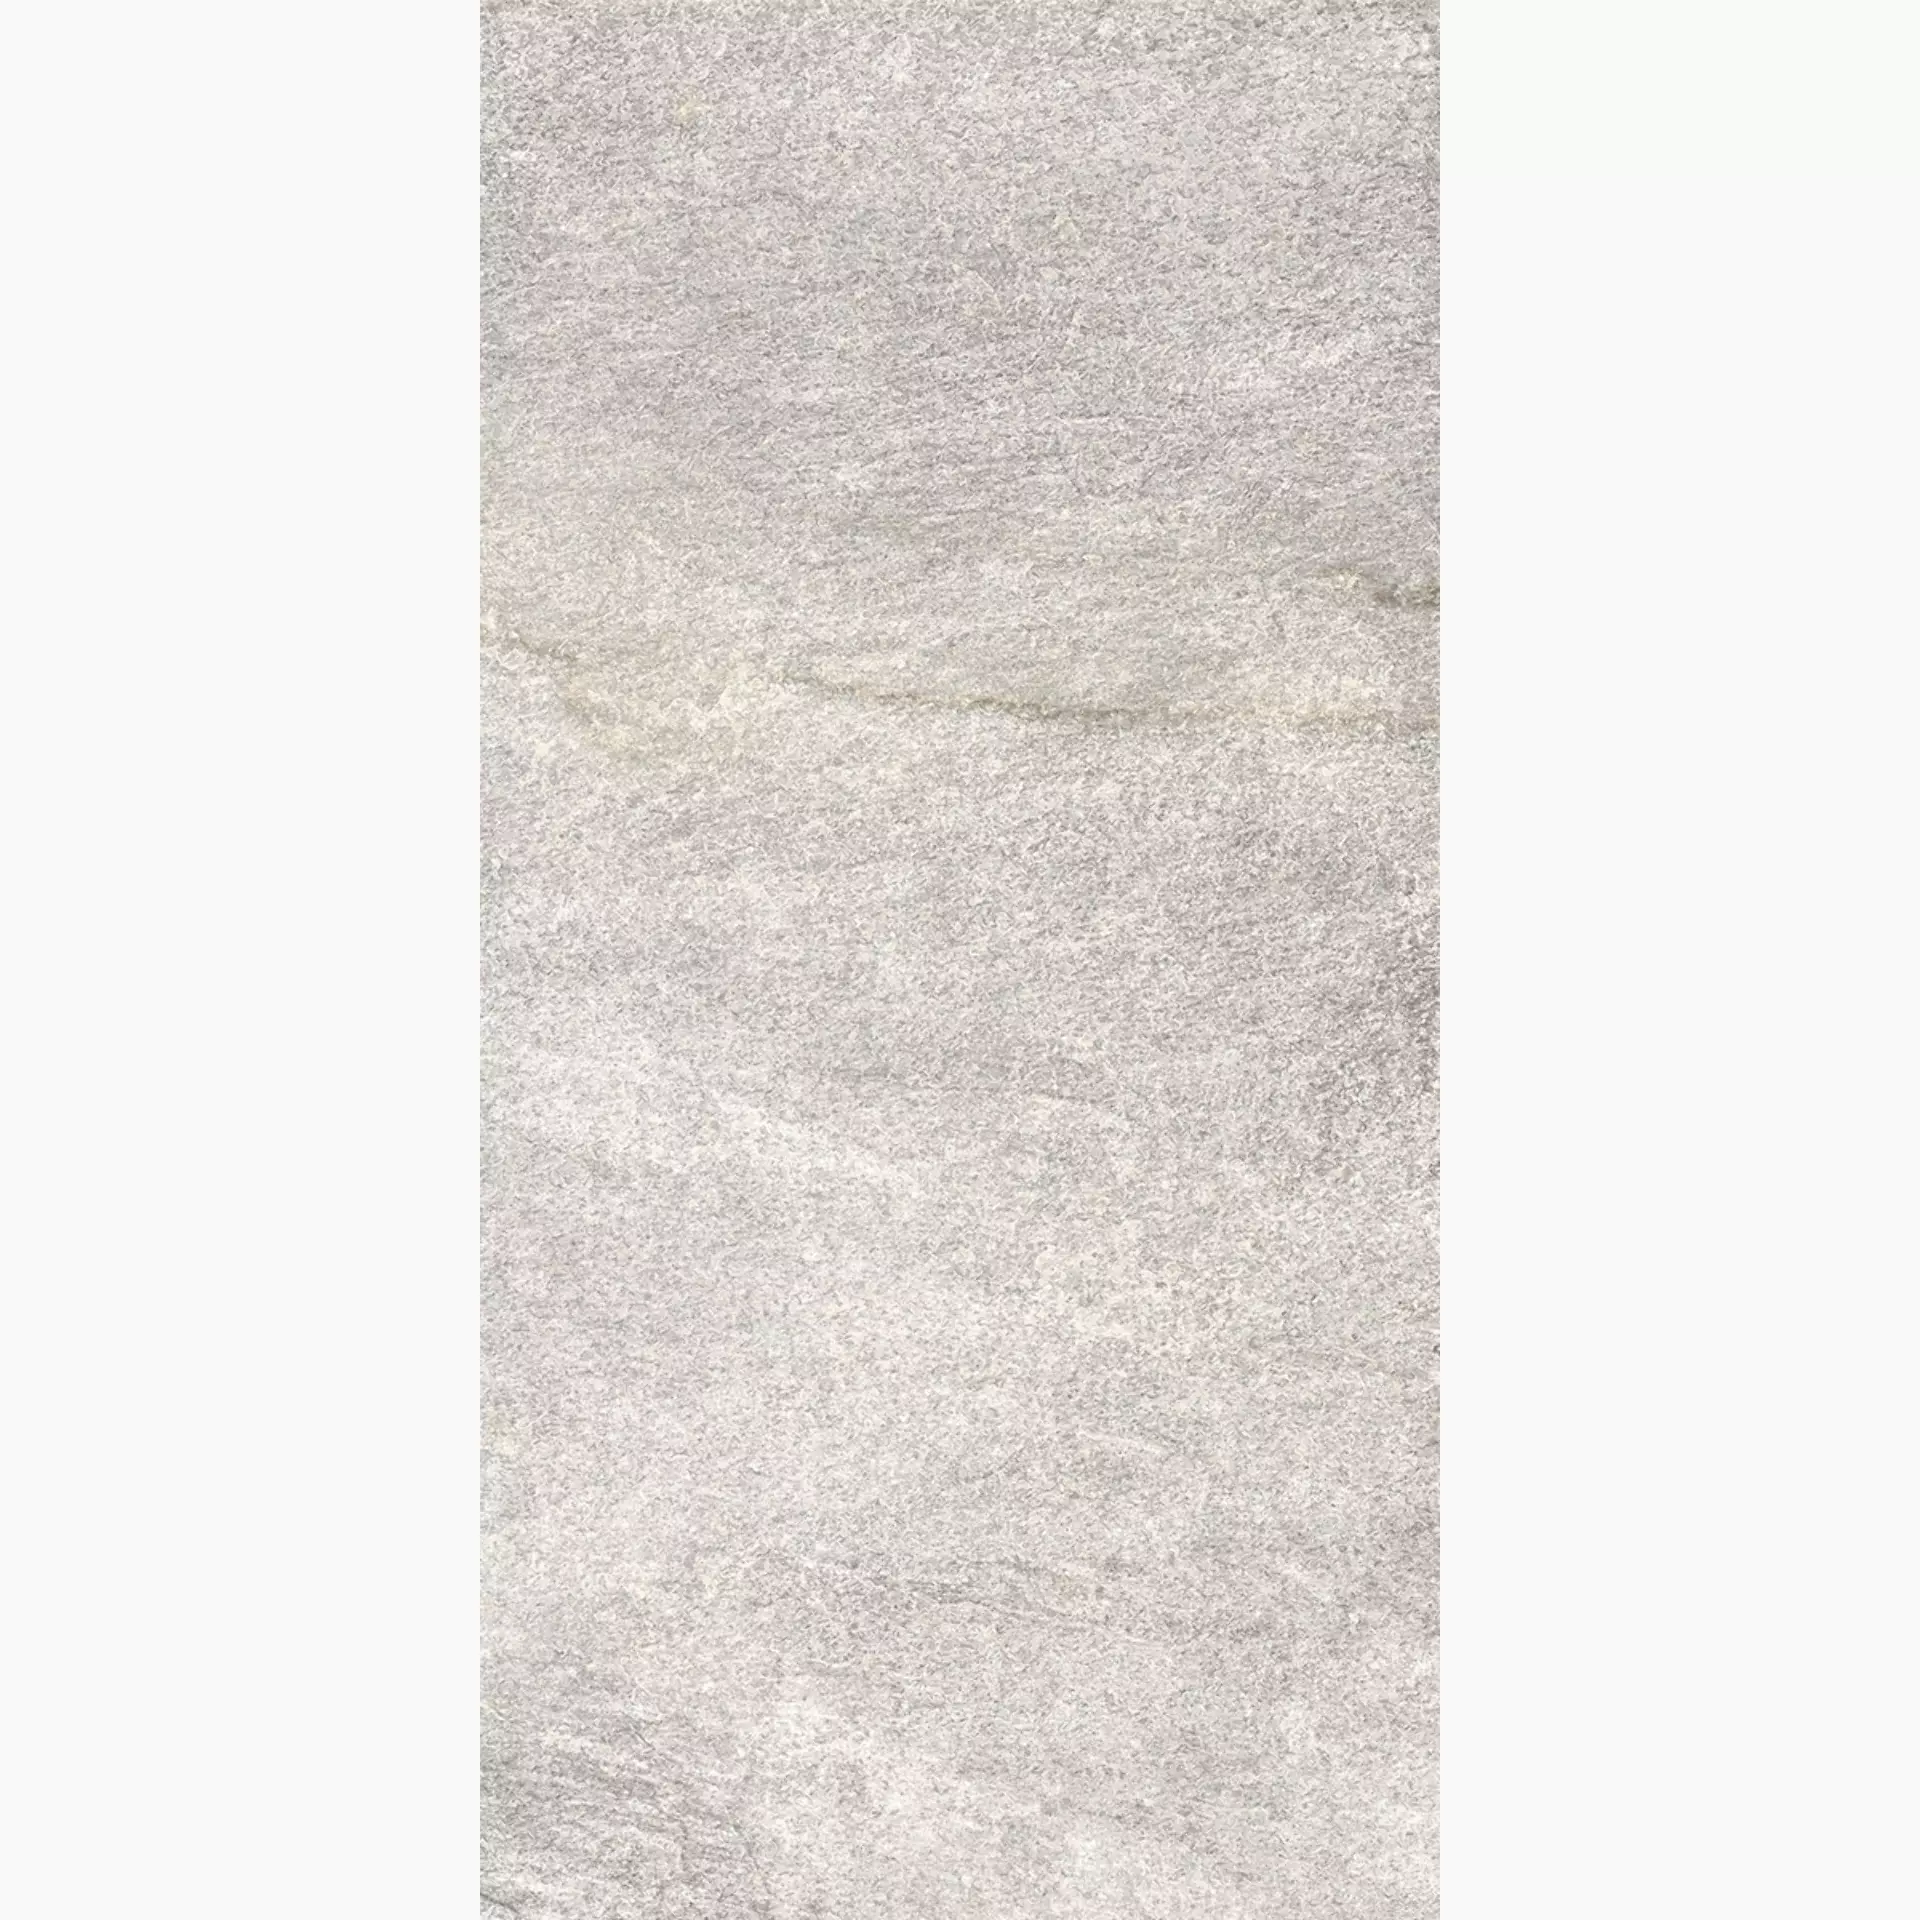 Rondine Quarzi Light Grey Naturale J87296 30,5x60,5cm 9,5mm